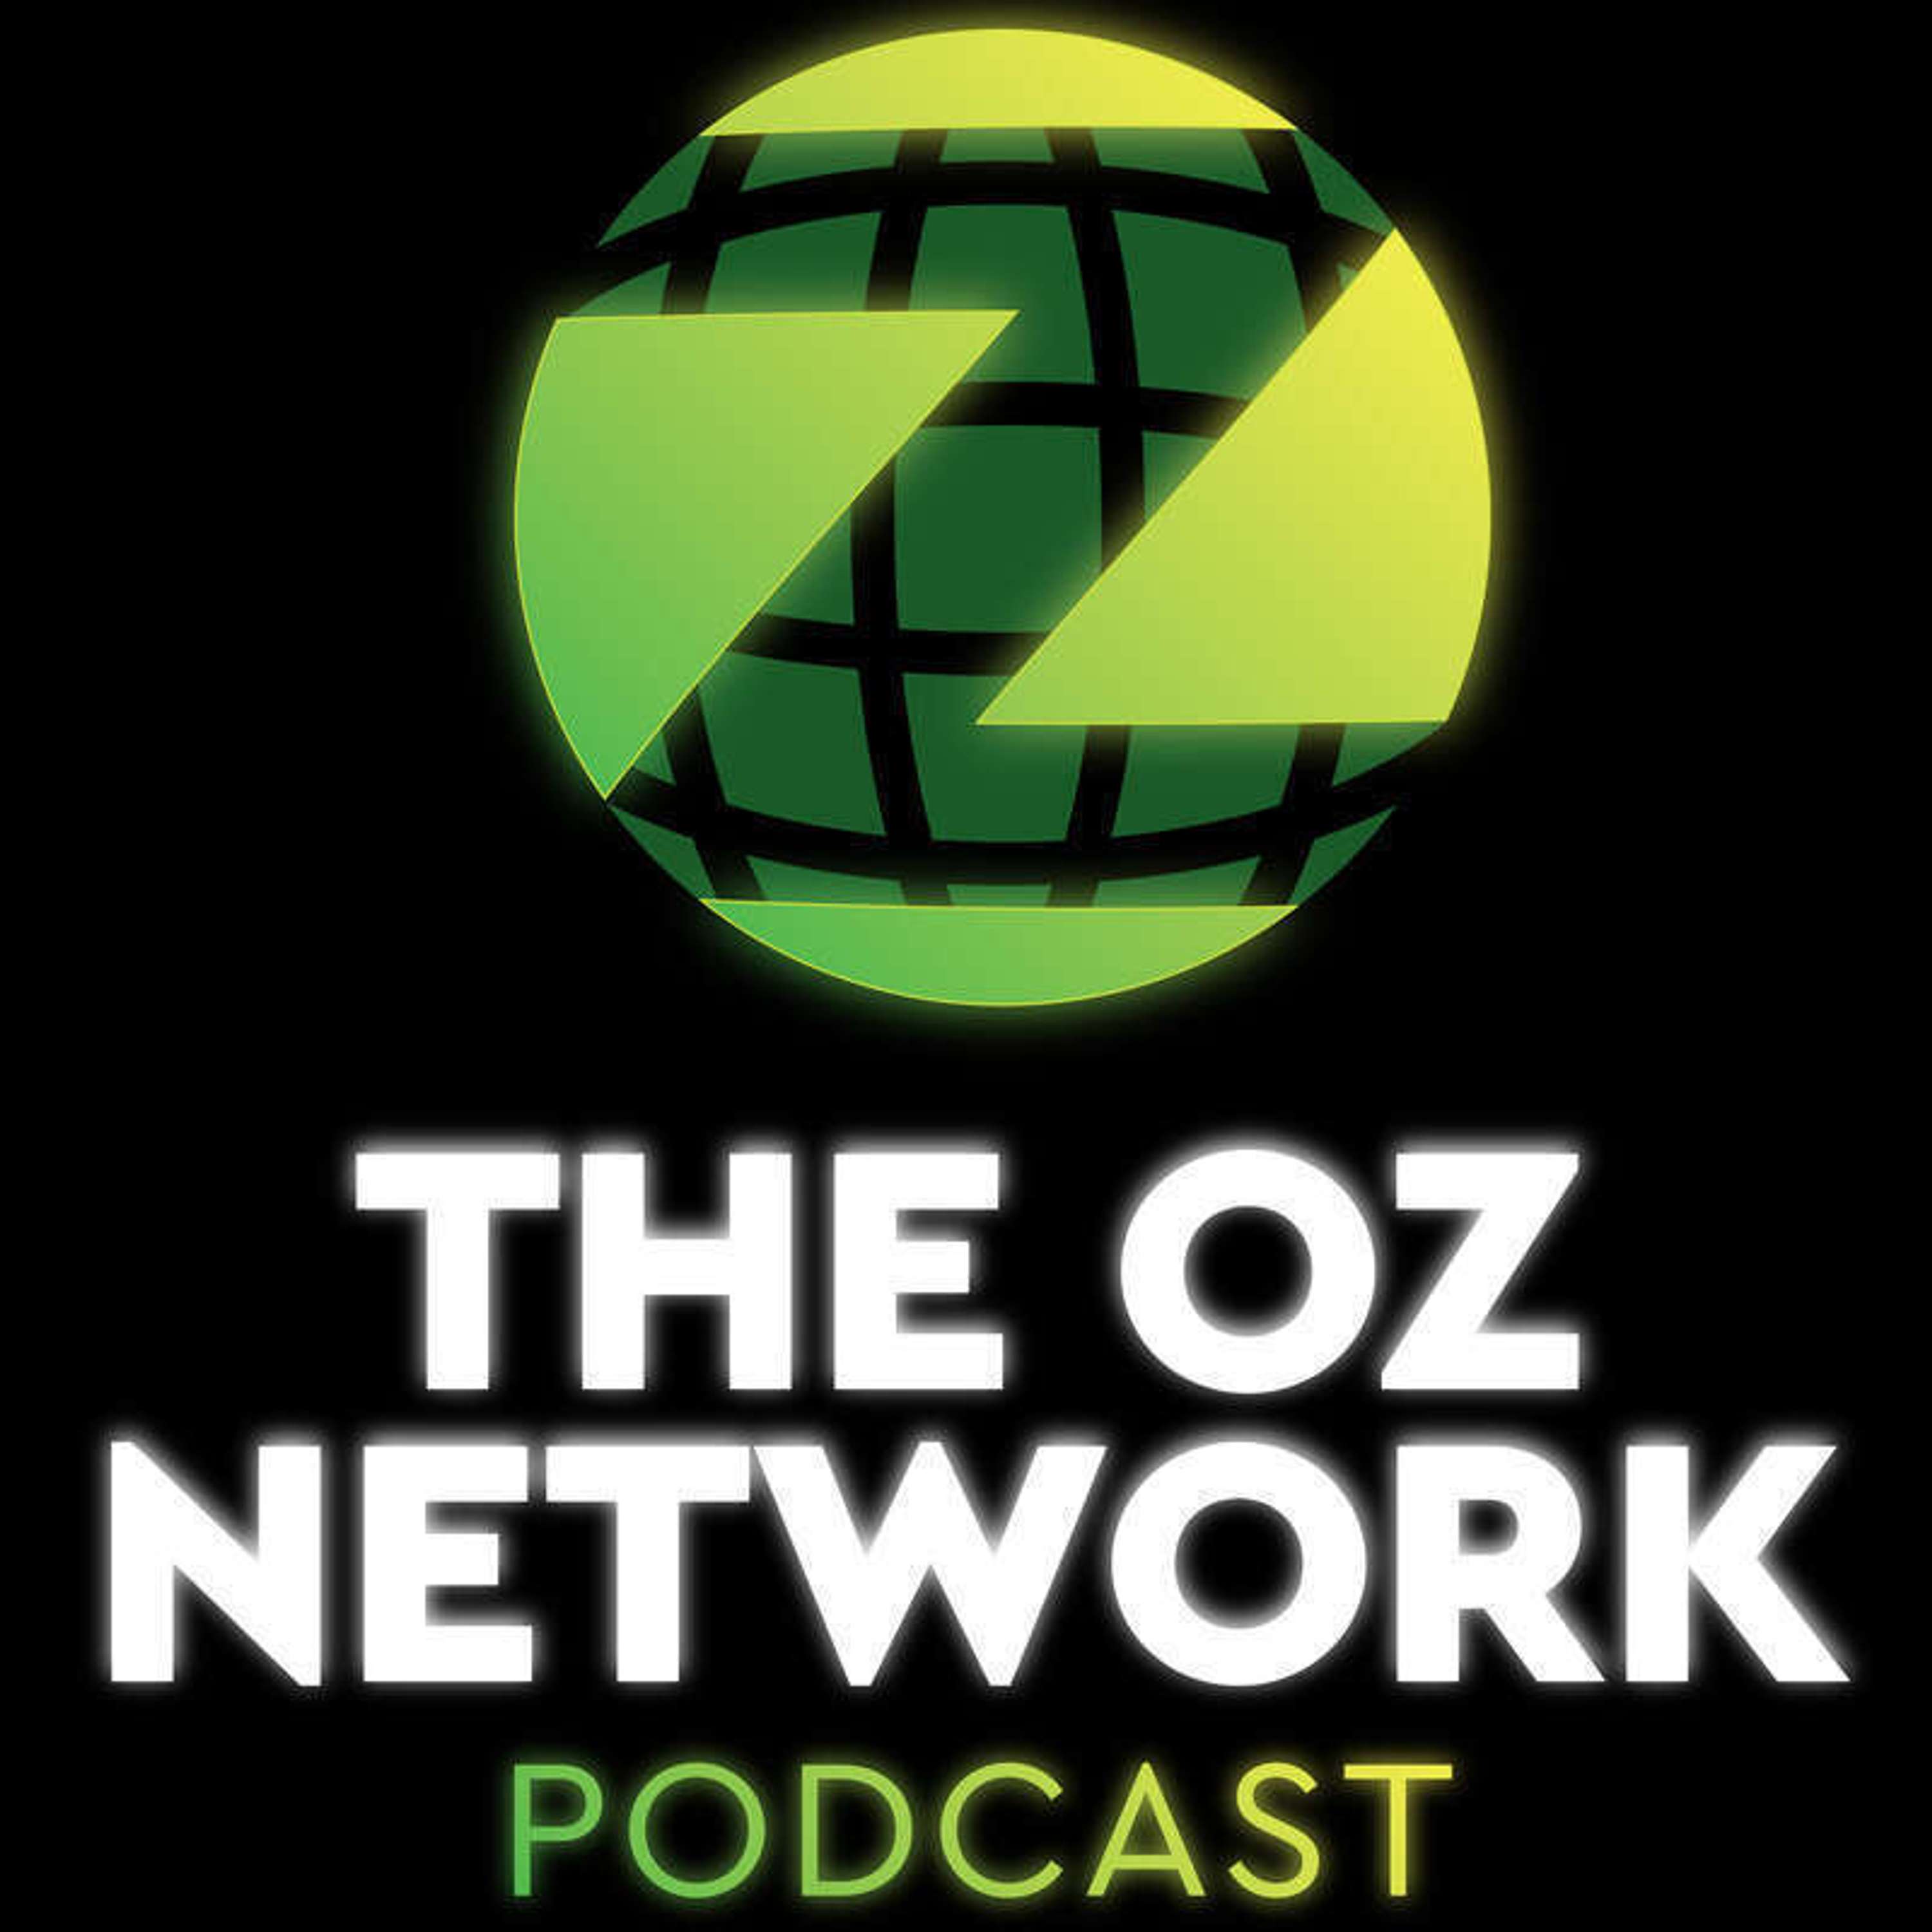 The Amazing Race Season 36, Episode 2 Recap - The Oz Network TV